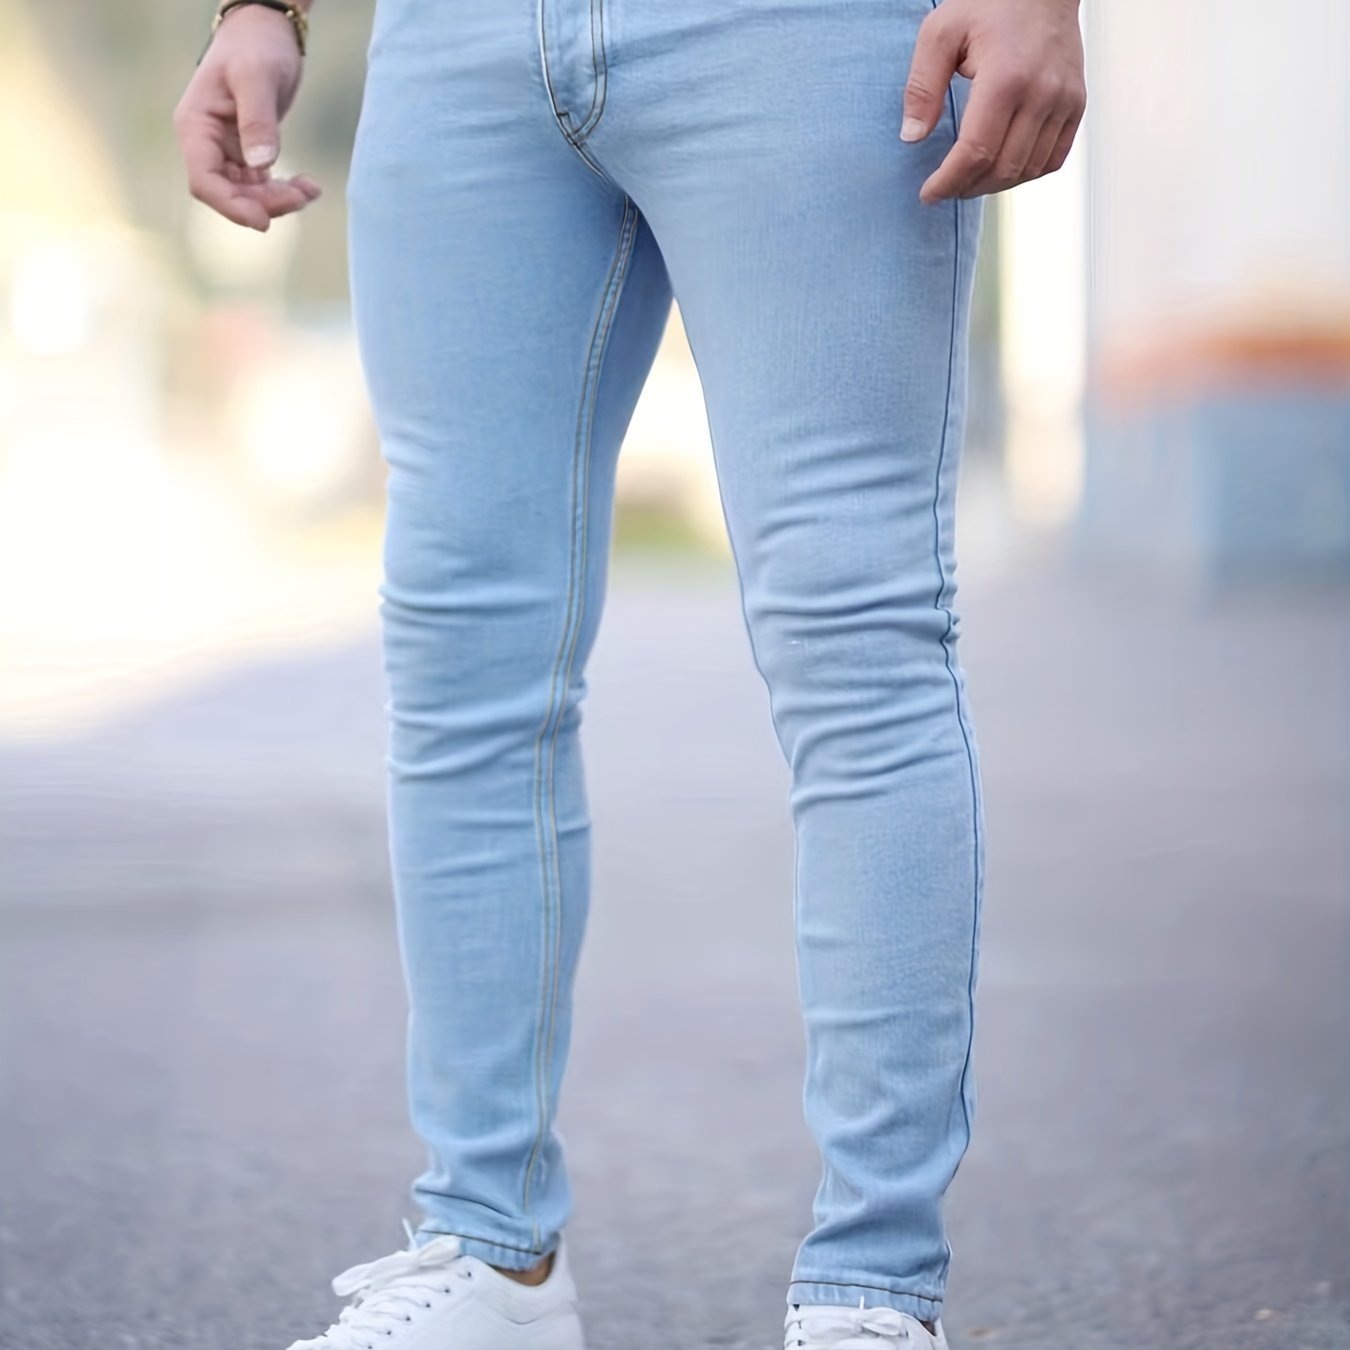 Cotton Jeans For Men Online - Stretchable Jeans